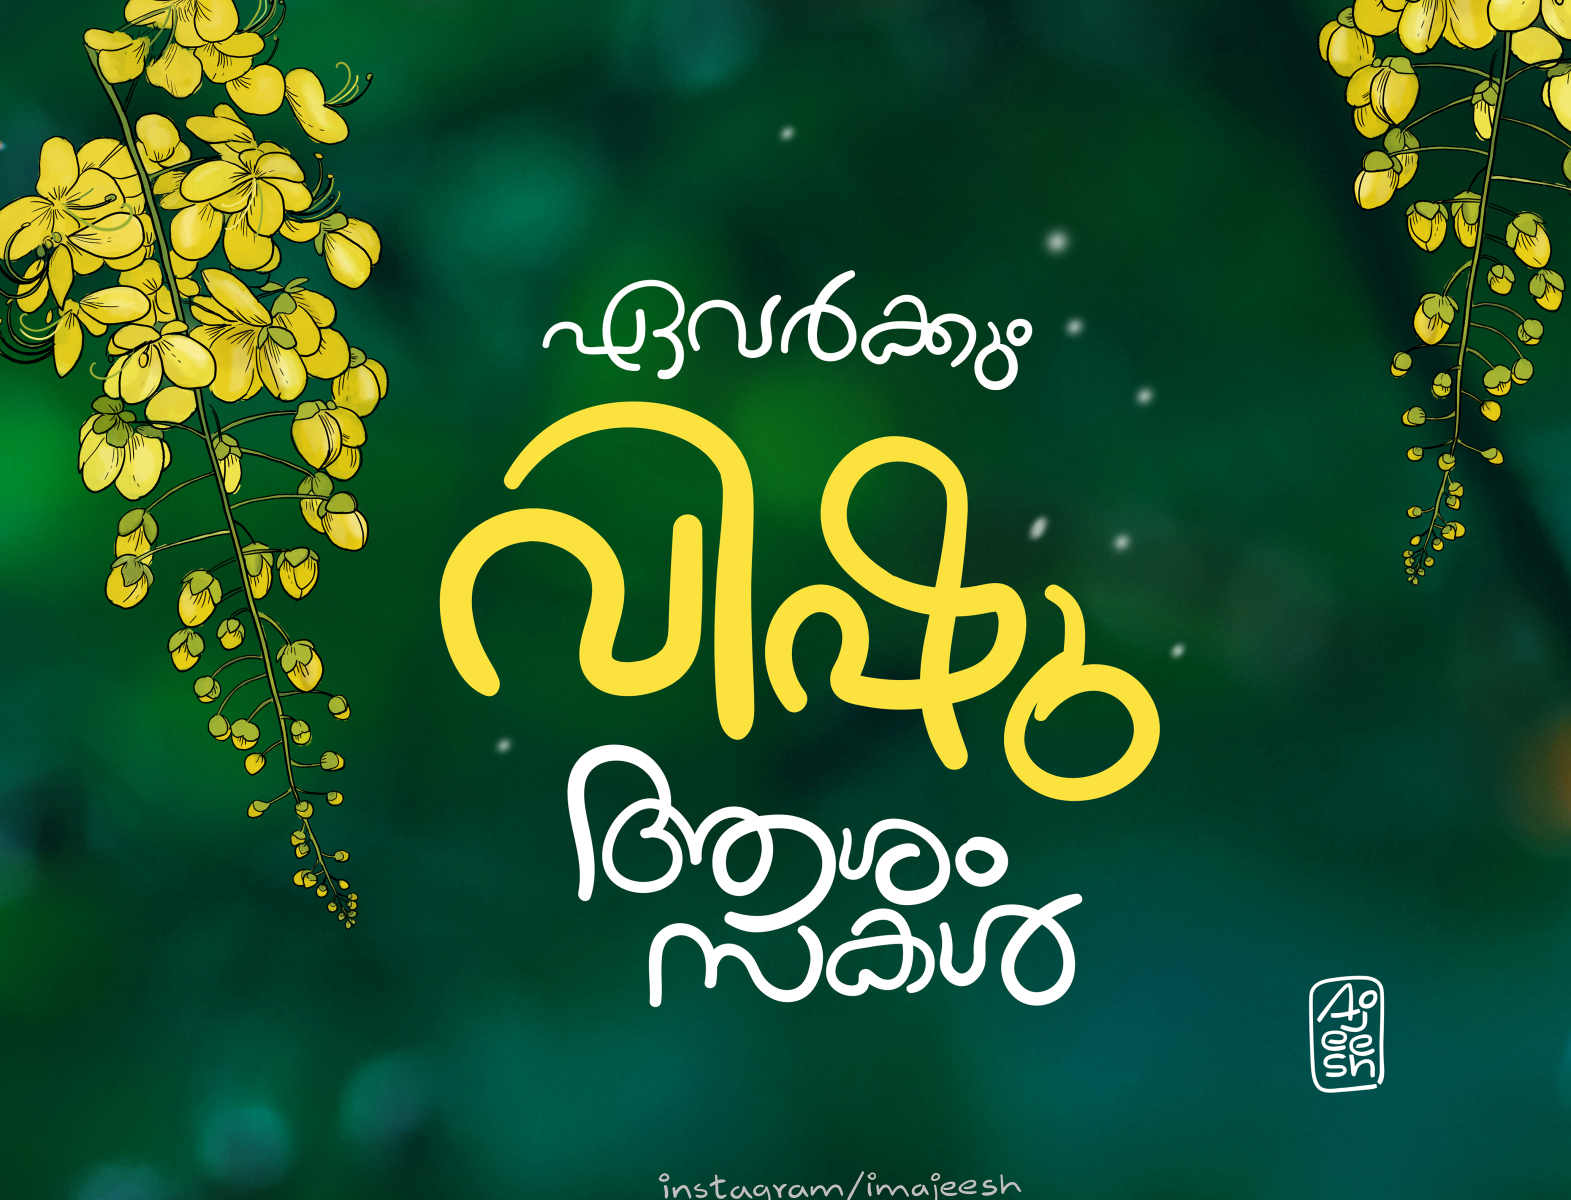 Vishu Malayalam Greetings by Ajeesh Kumar on Dribbble